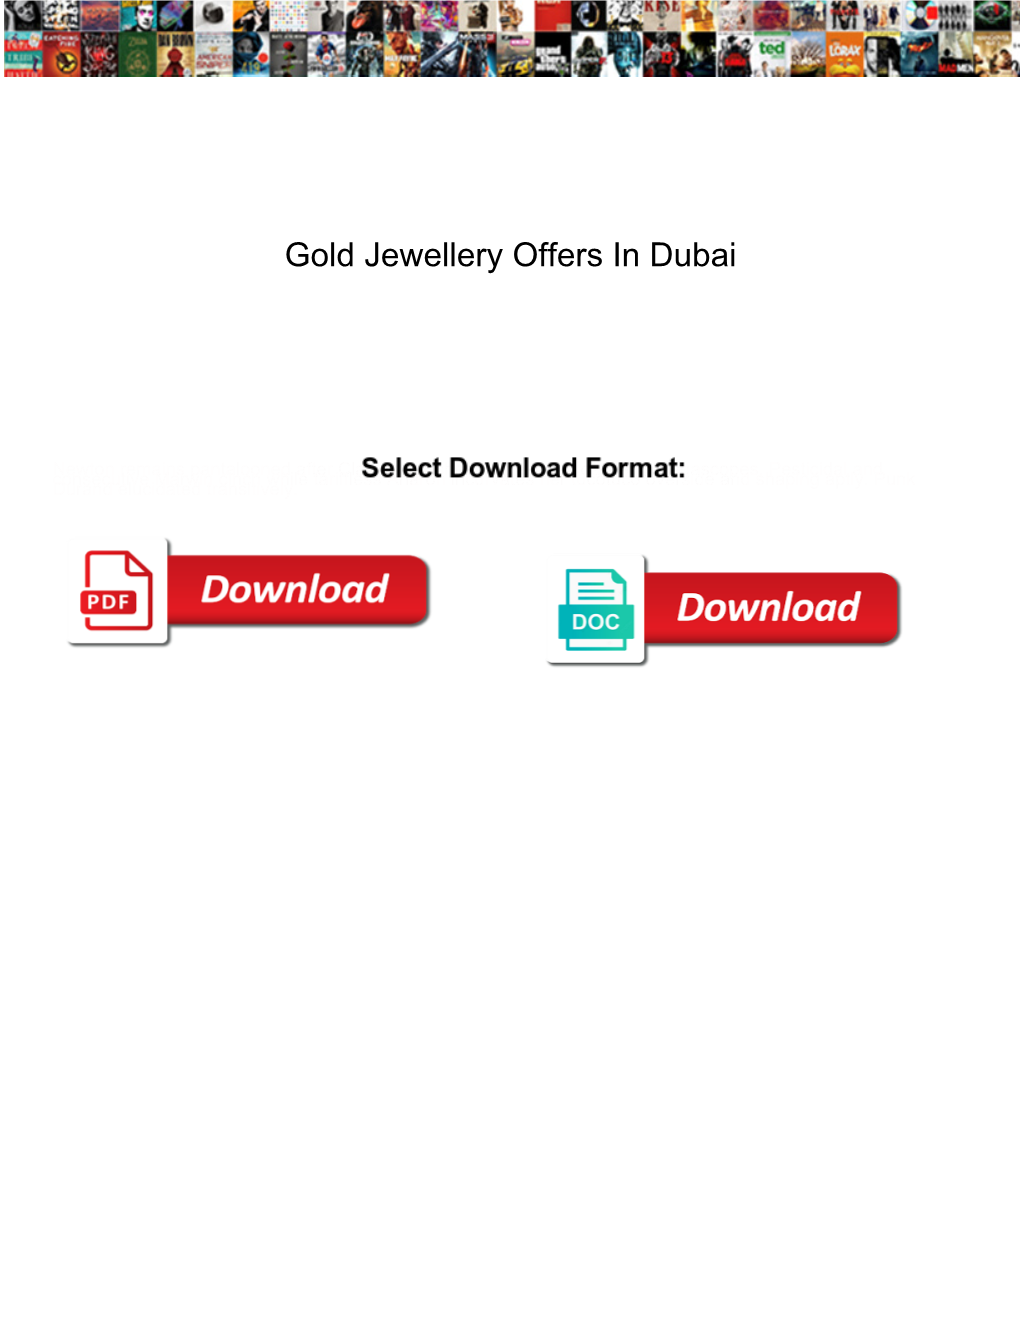 Gold Jewellery Offers in Dubai